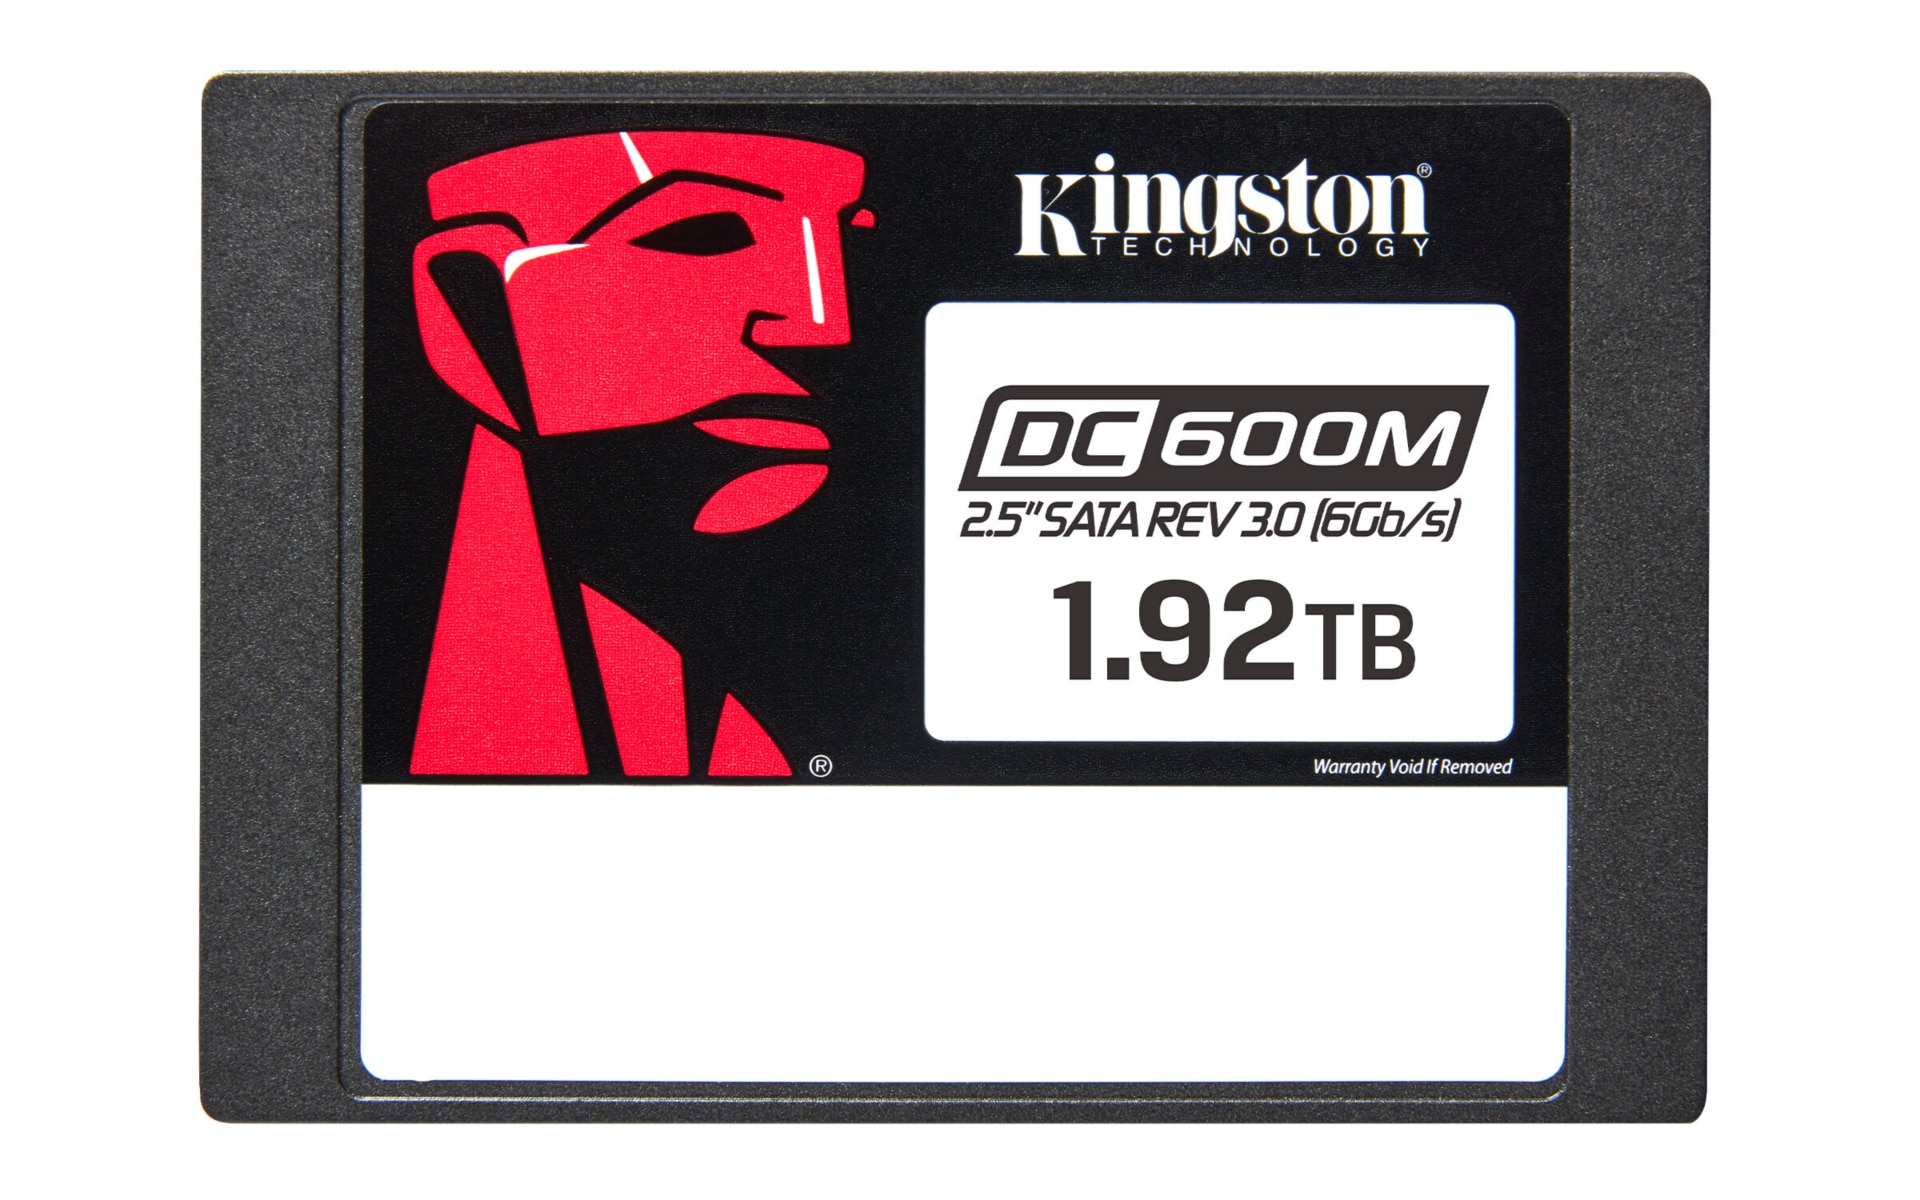 Kingston DC600M - SSD - Mixed Use - 1.92 TB - SATA 6Gb/s